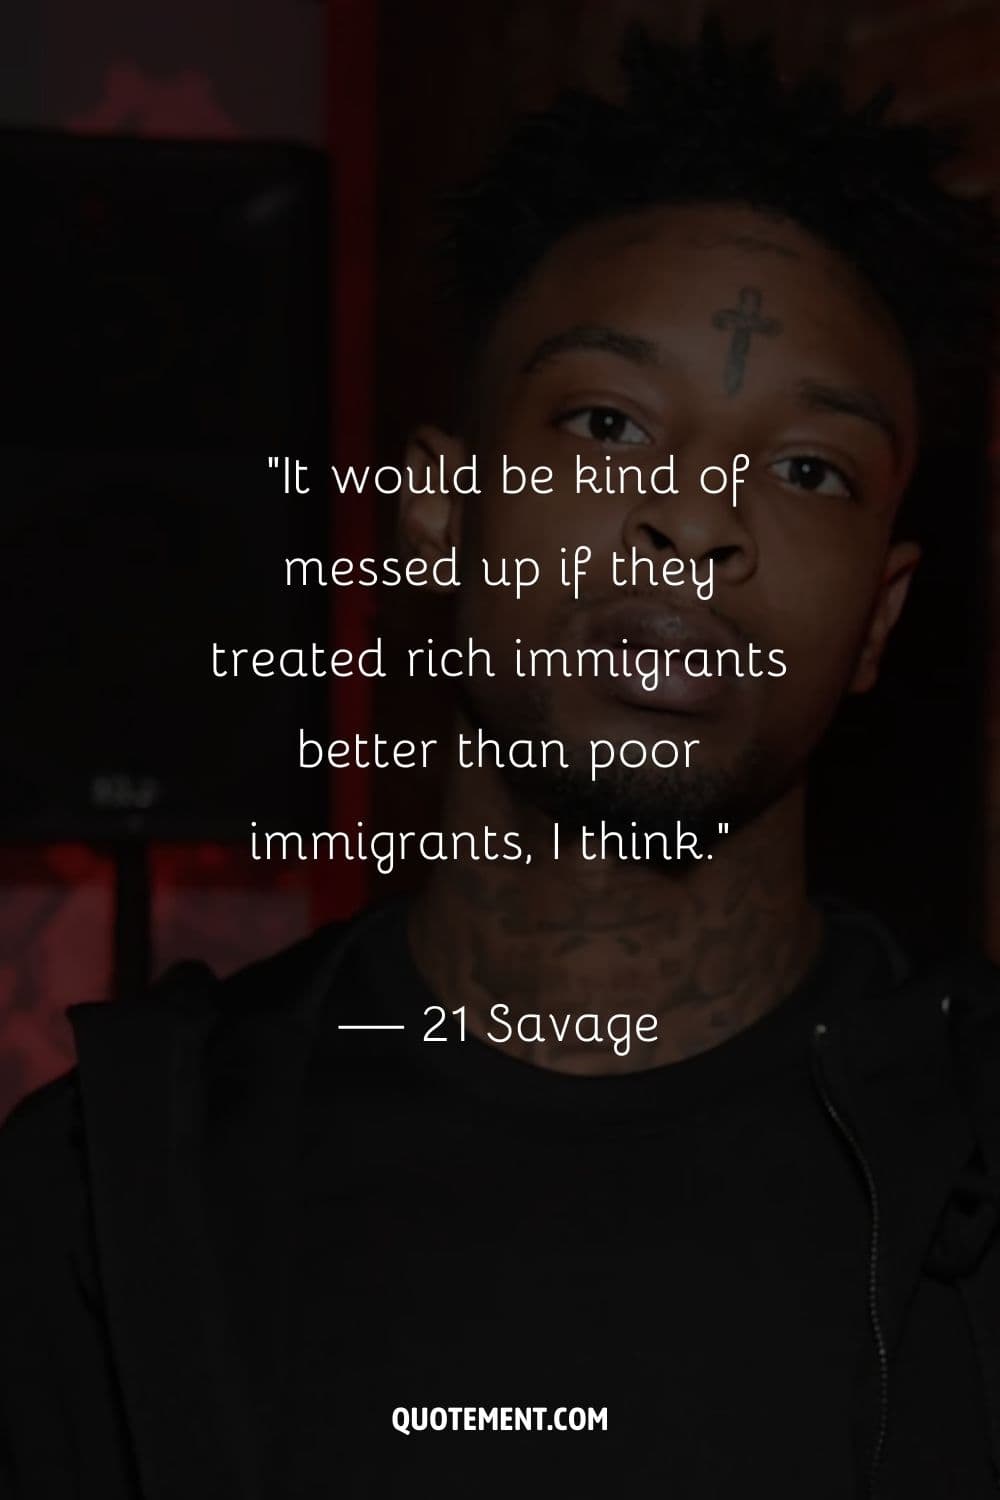 21 Savage, a rising rap superstar.